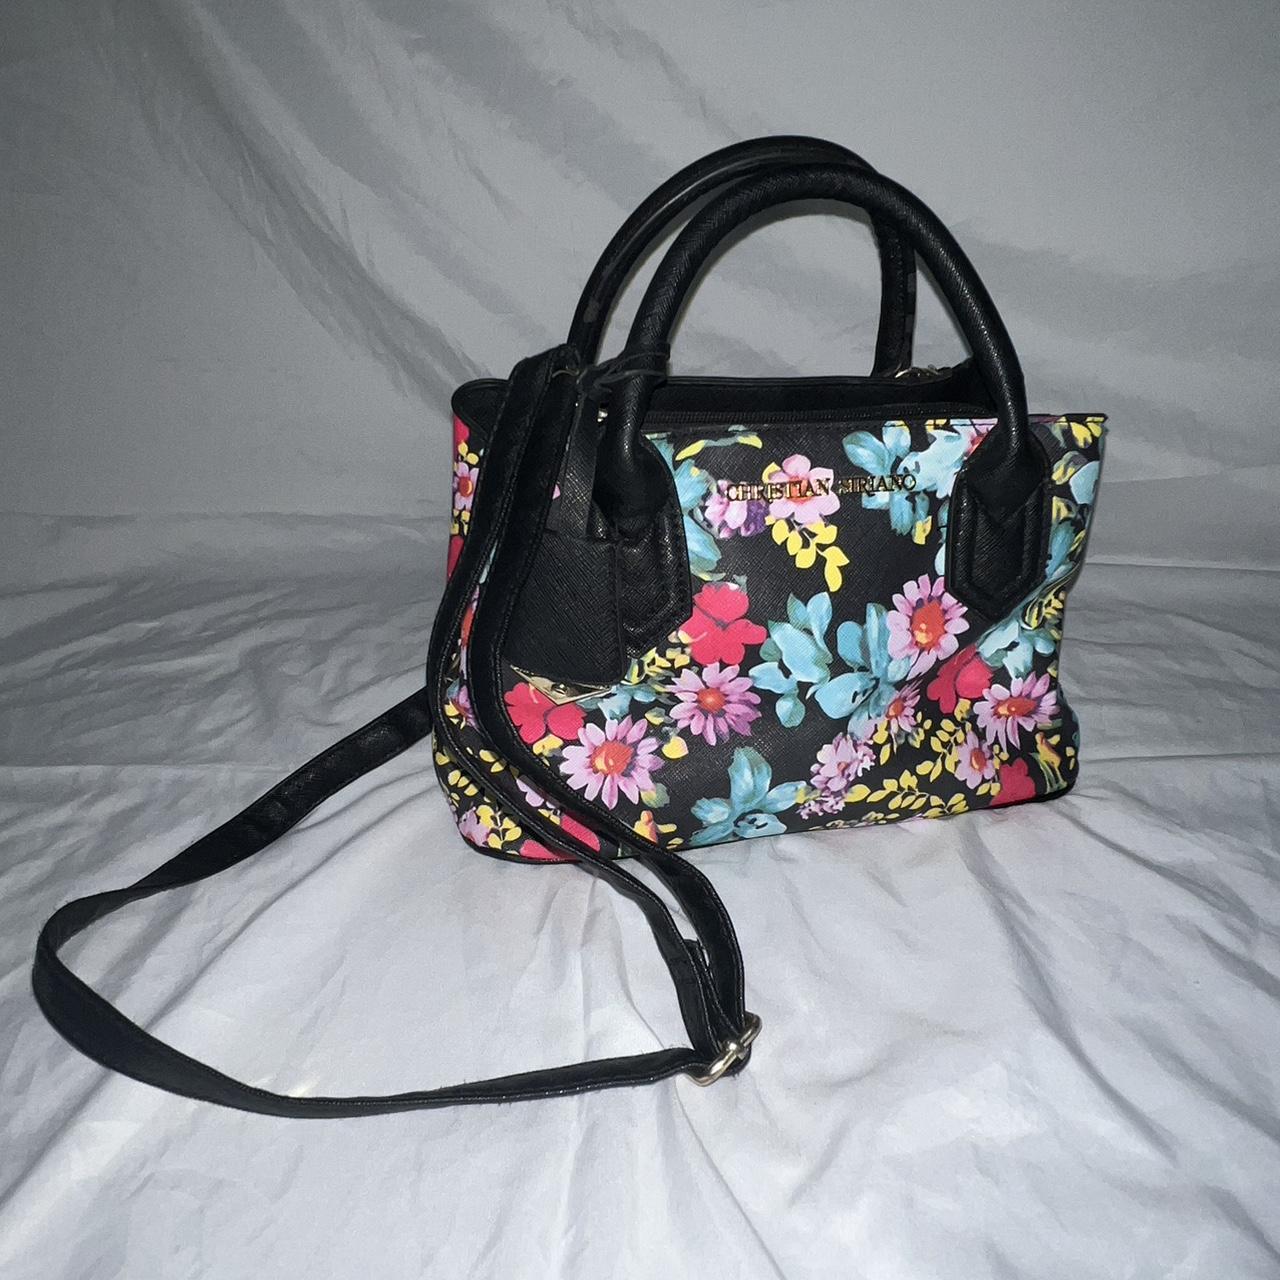 Christian Siriano for Payless Spring Floral Purse Handbag | eBay